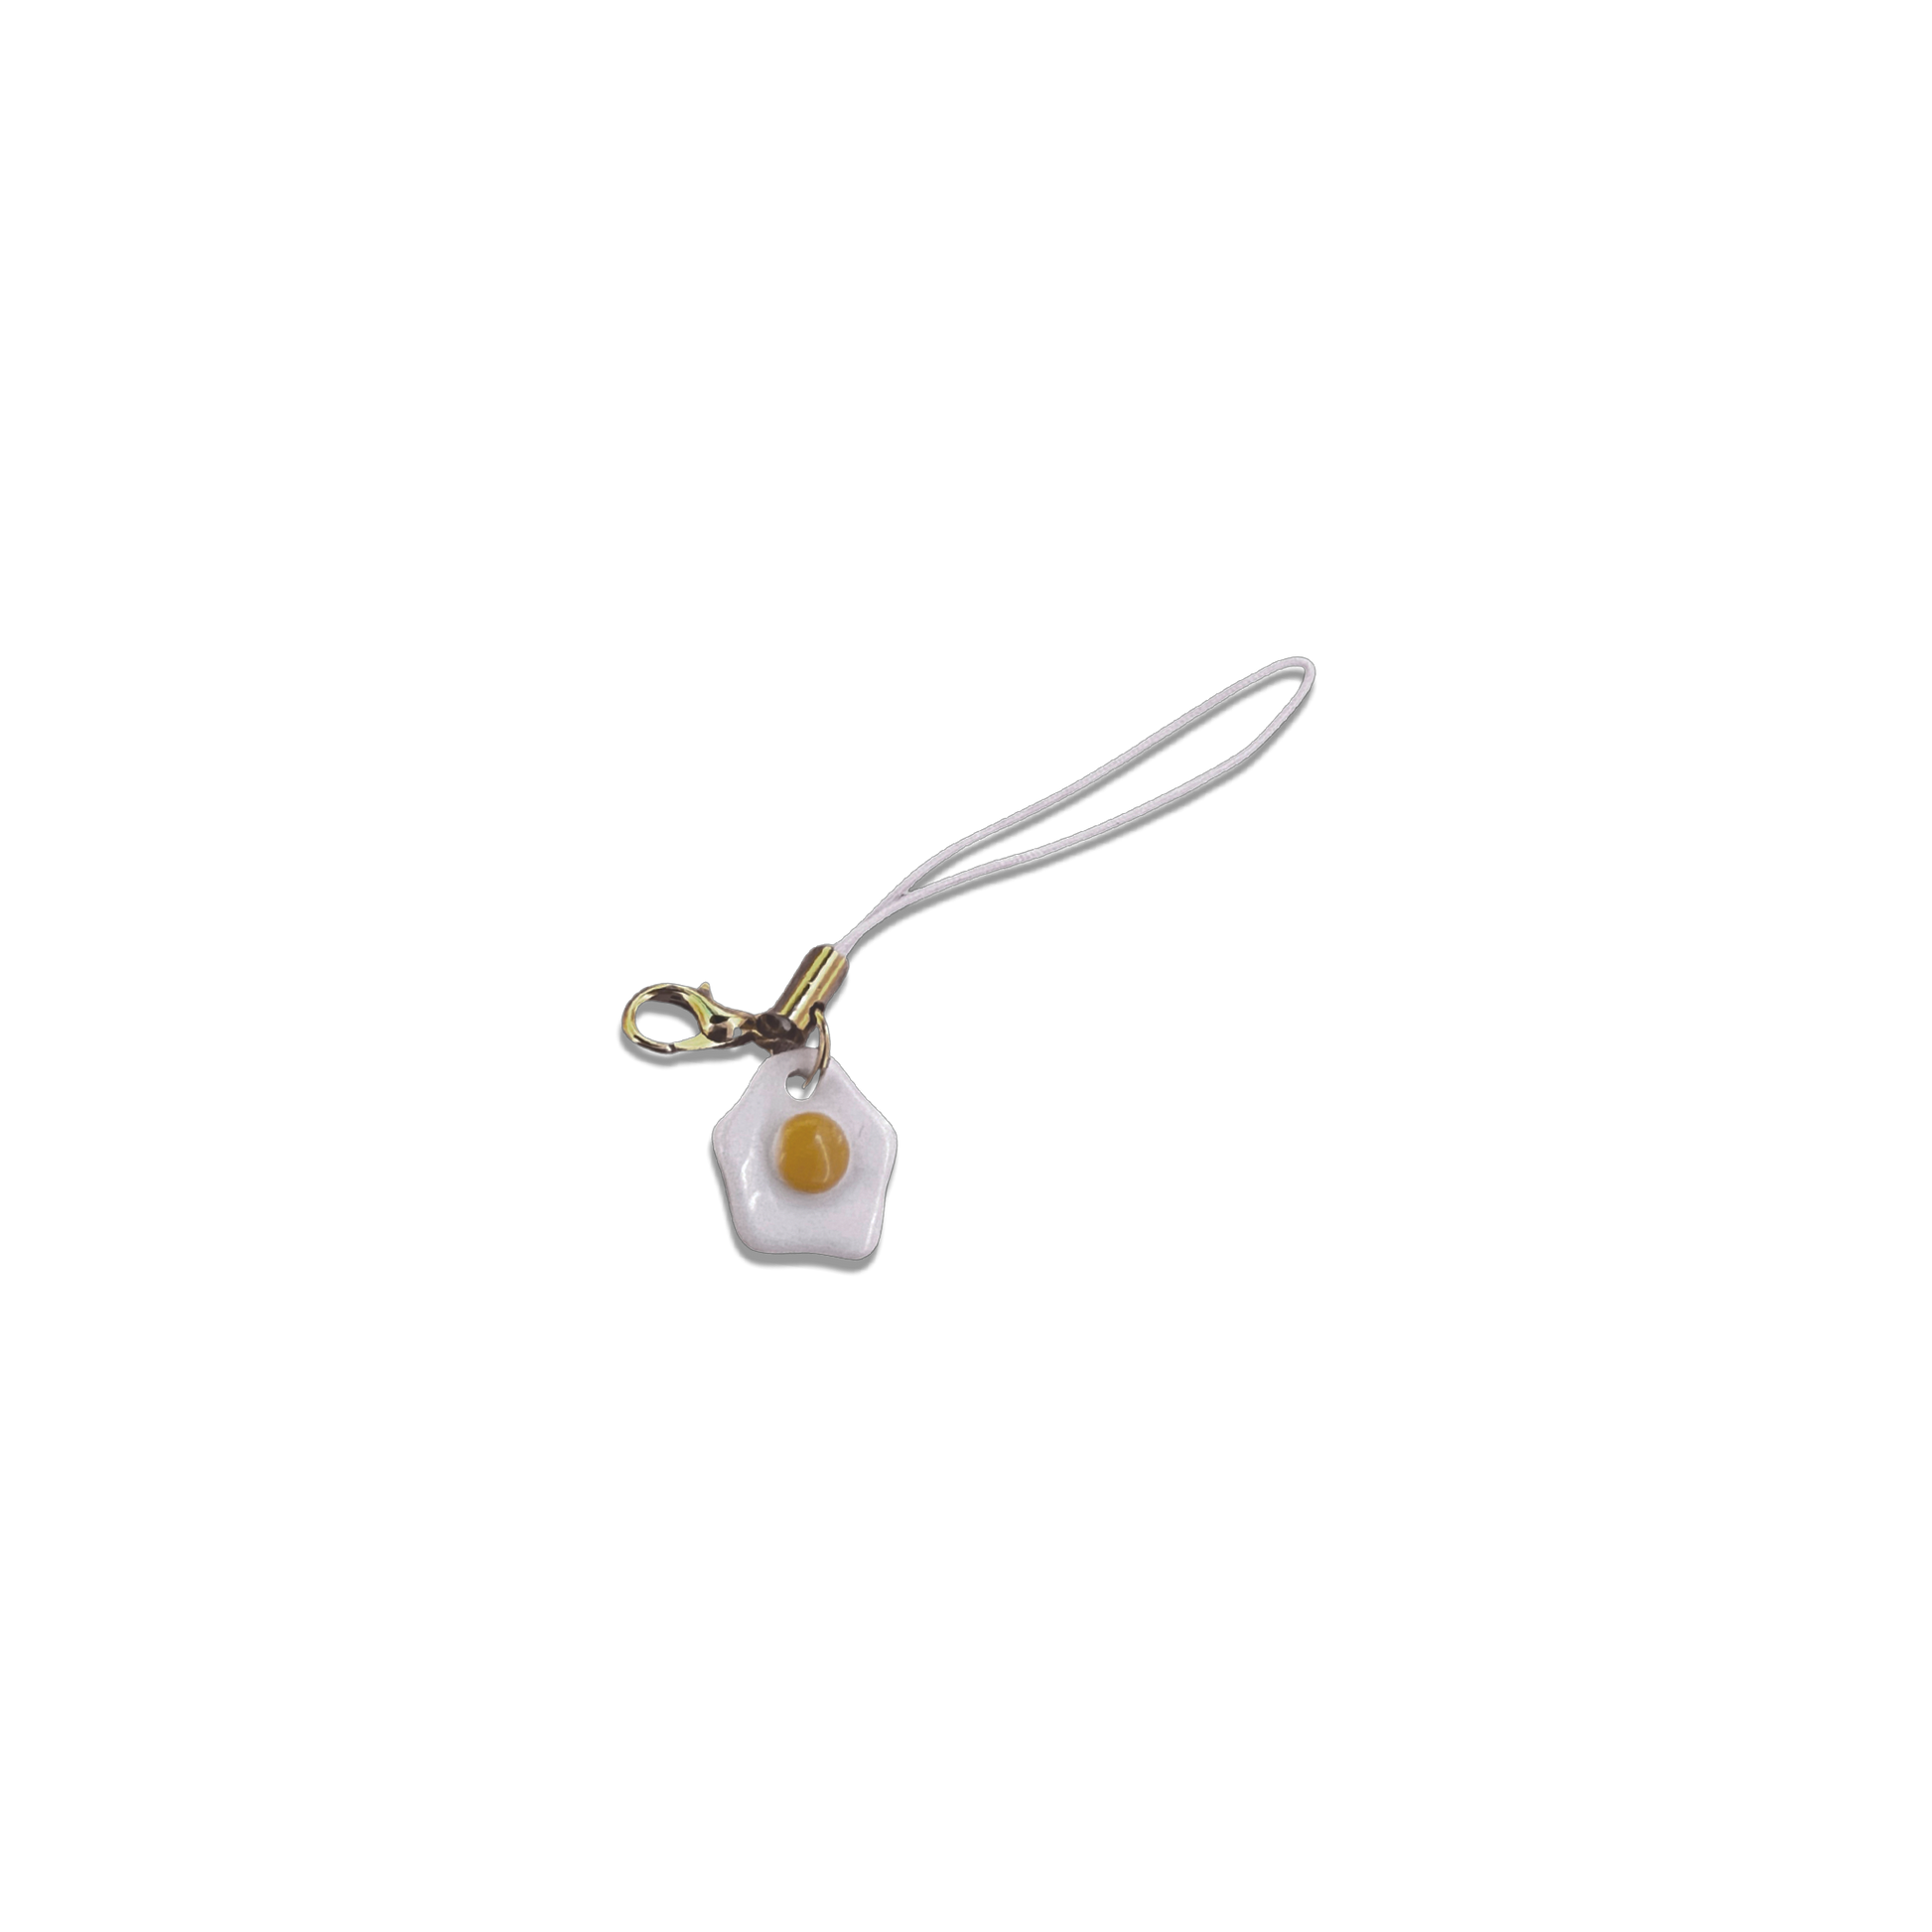 Small egg charm on a basic white phone strap.